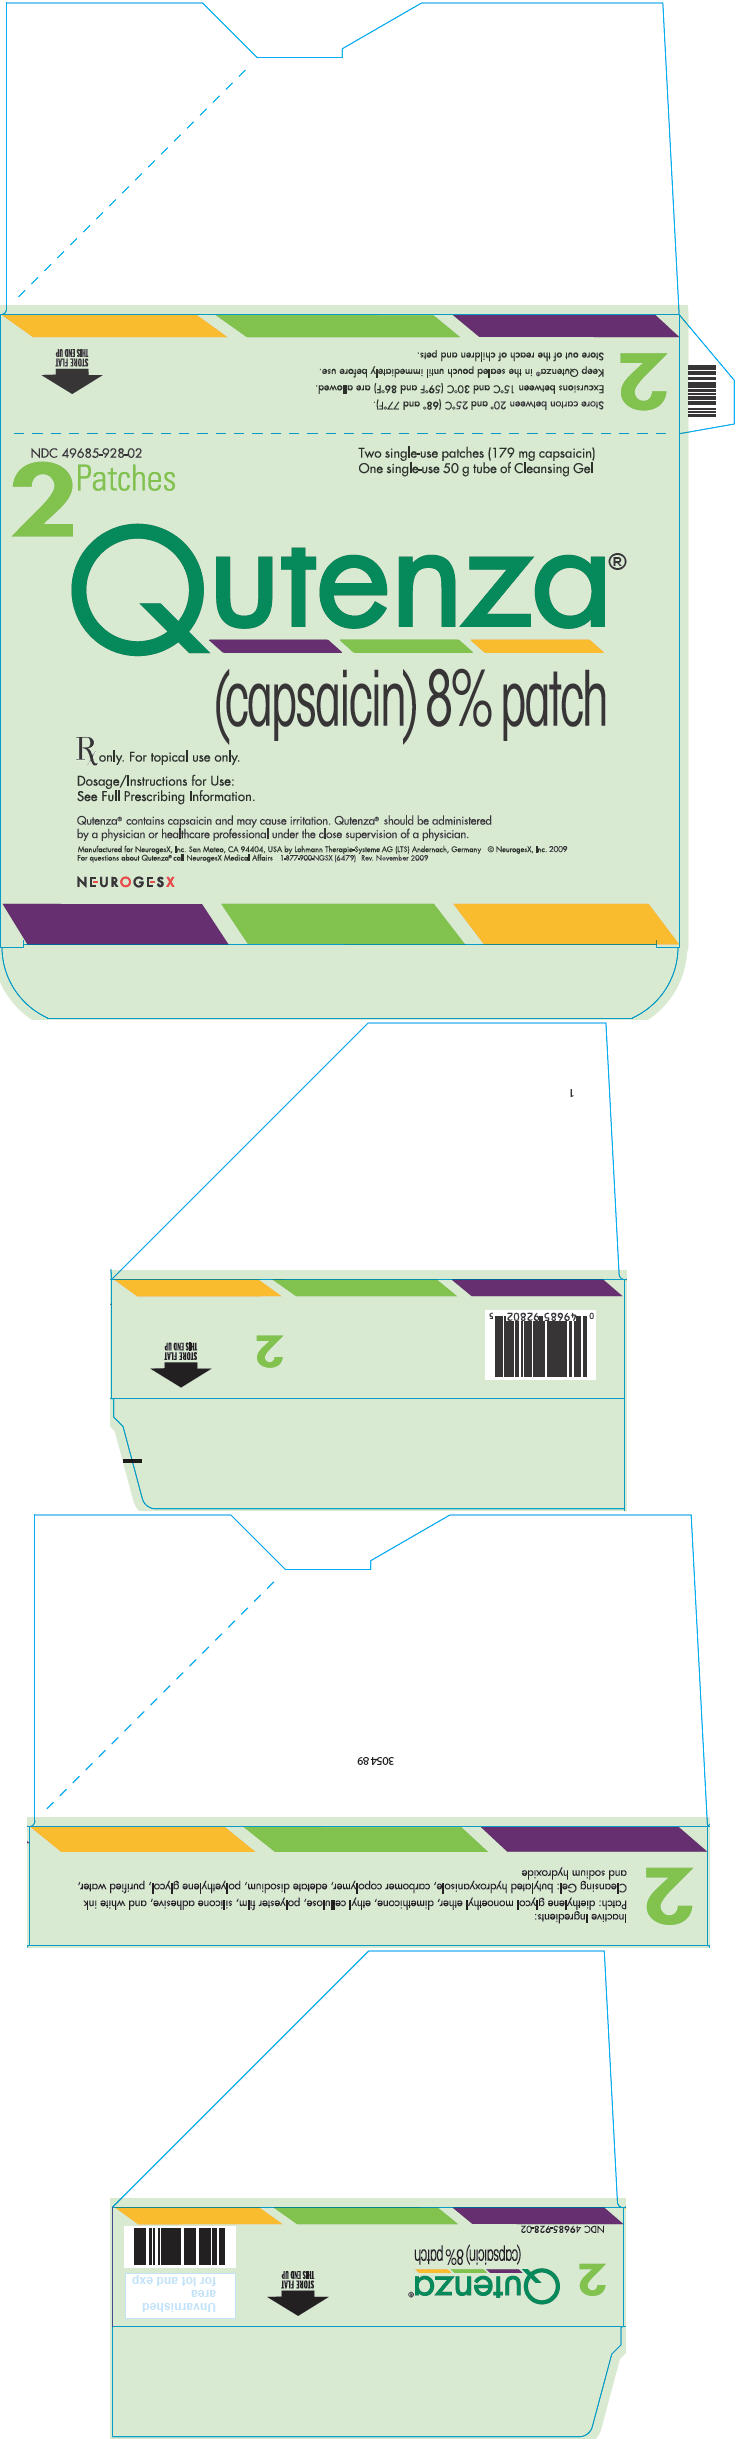 PRINCIPAL DISPLAY PANEL - 2 Pouches Kit Carton